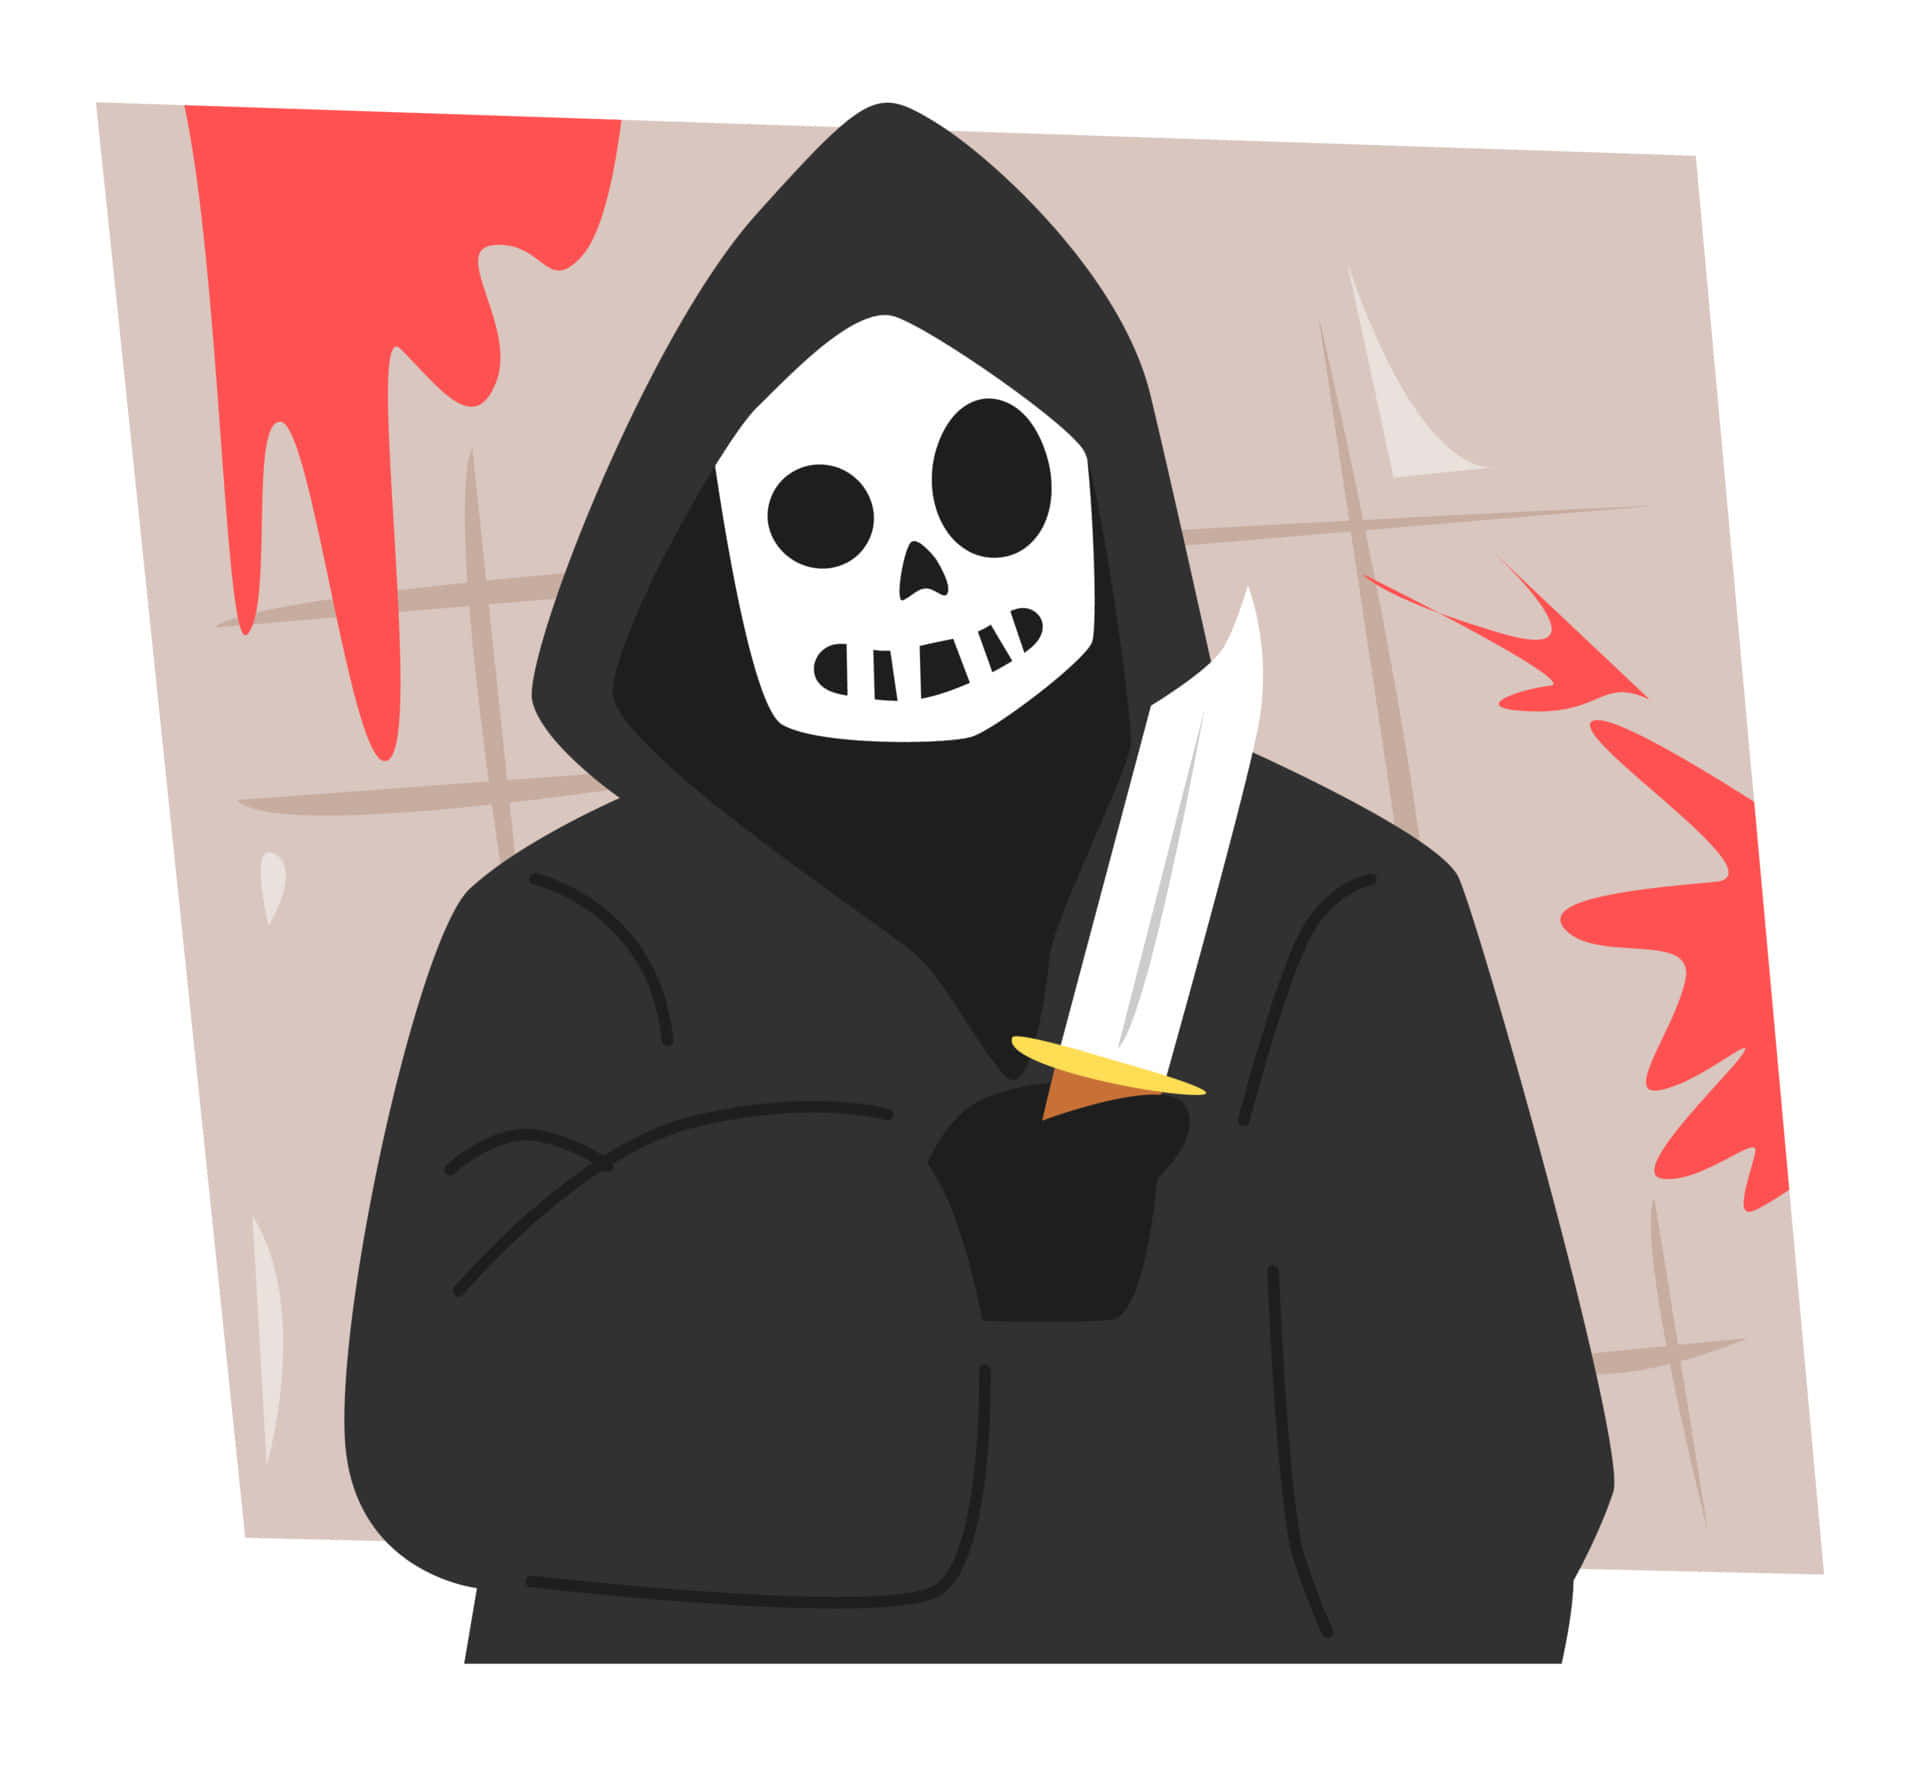 a skeleton holding a knife